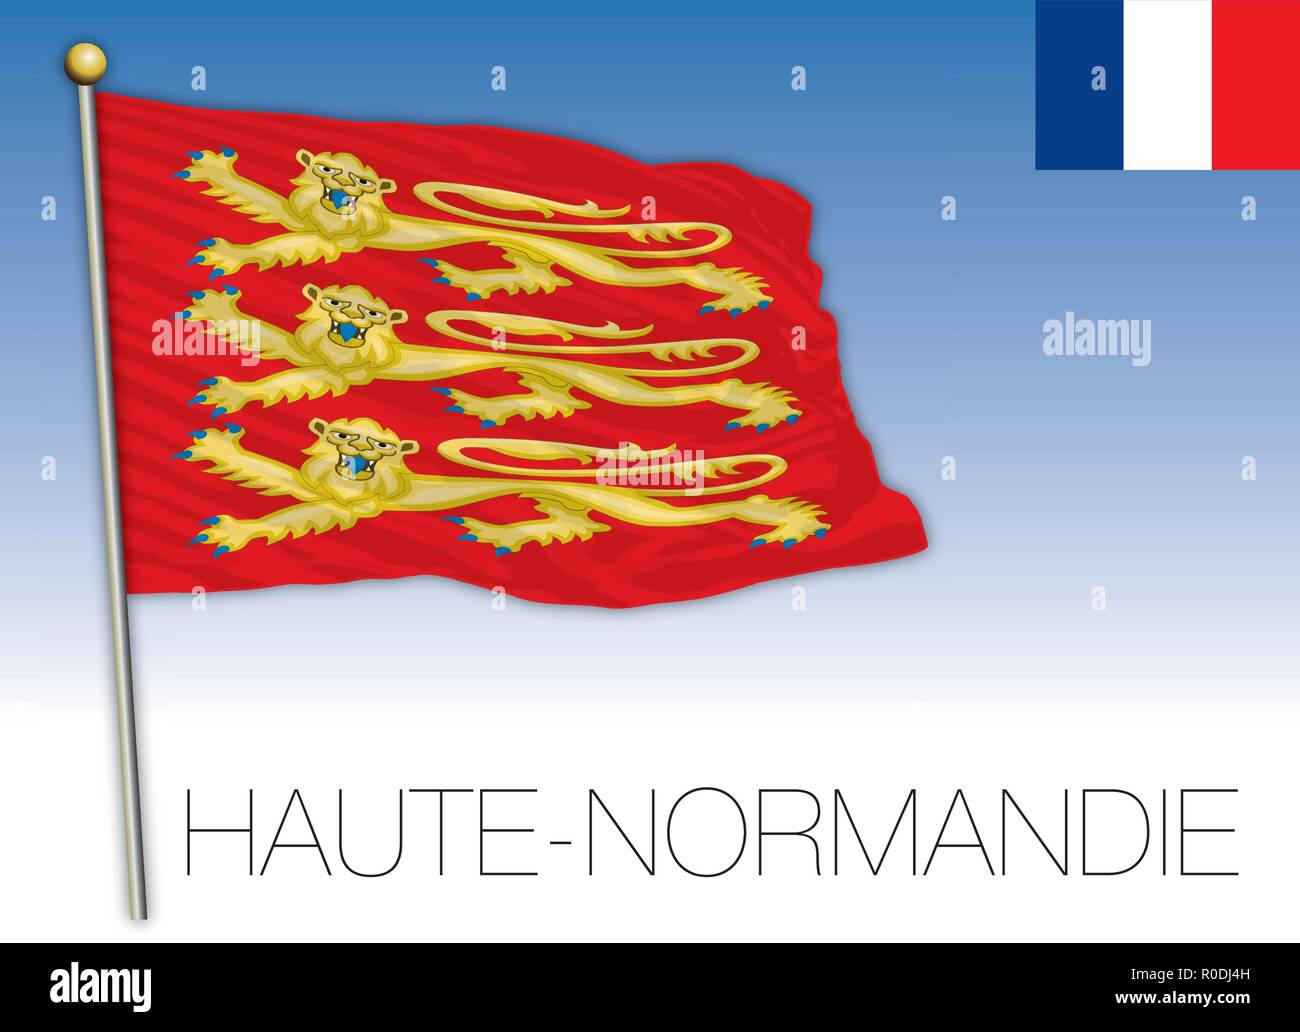 Haute Normandie regional flag, France, vector illustration Stock Vector